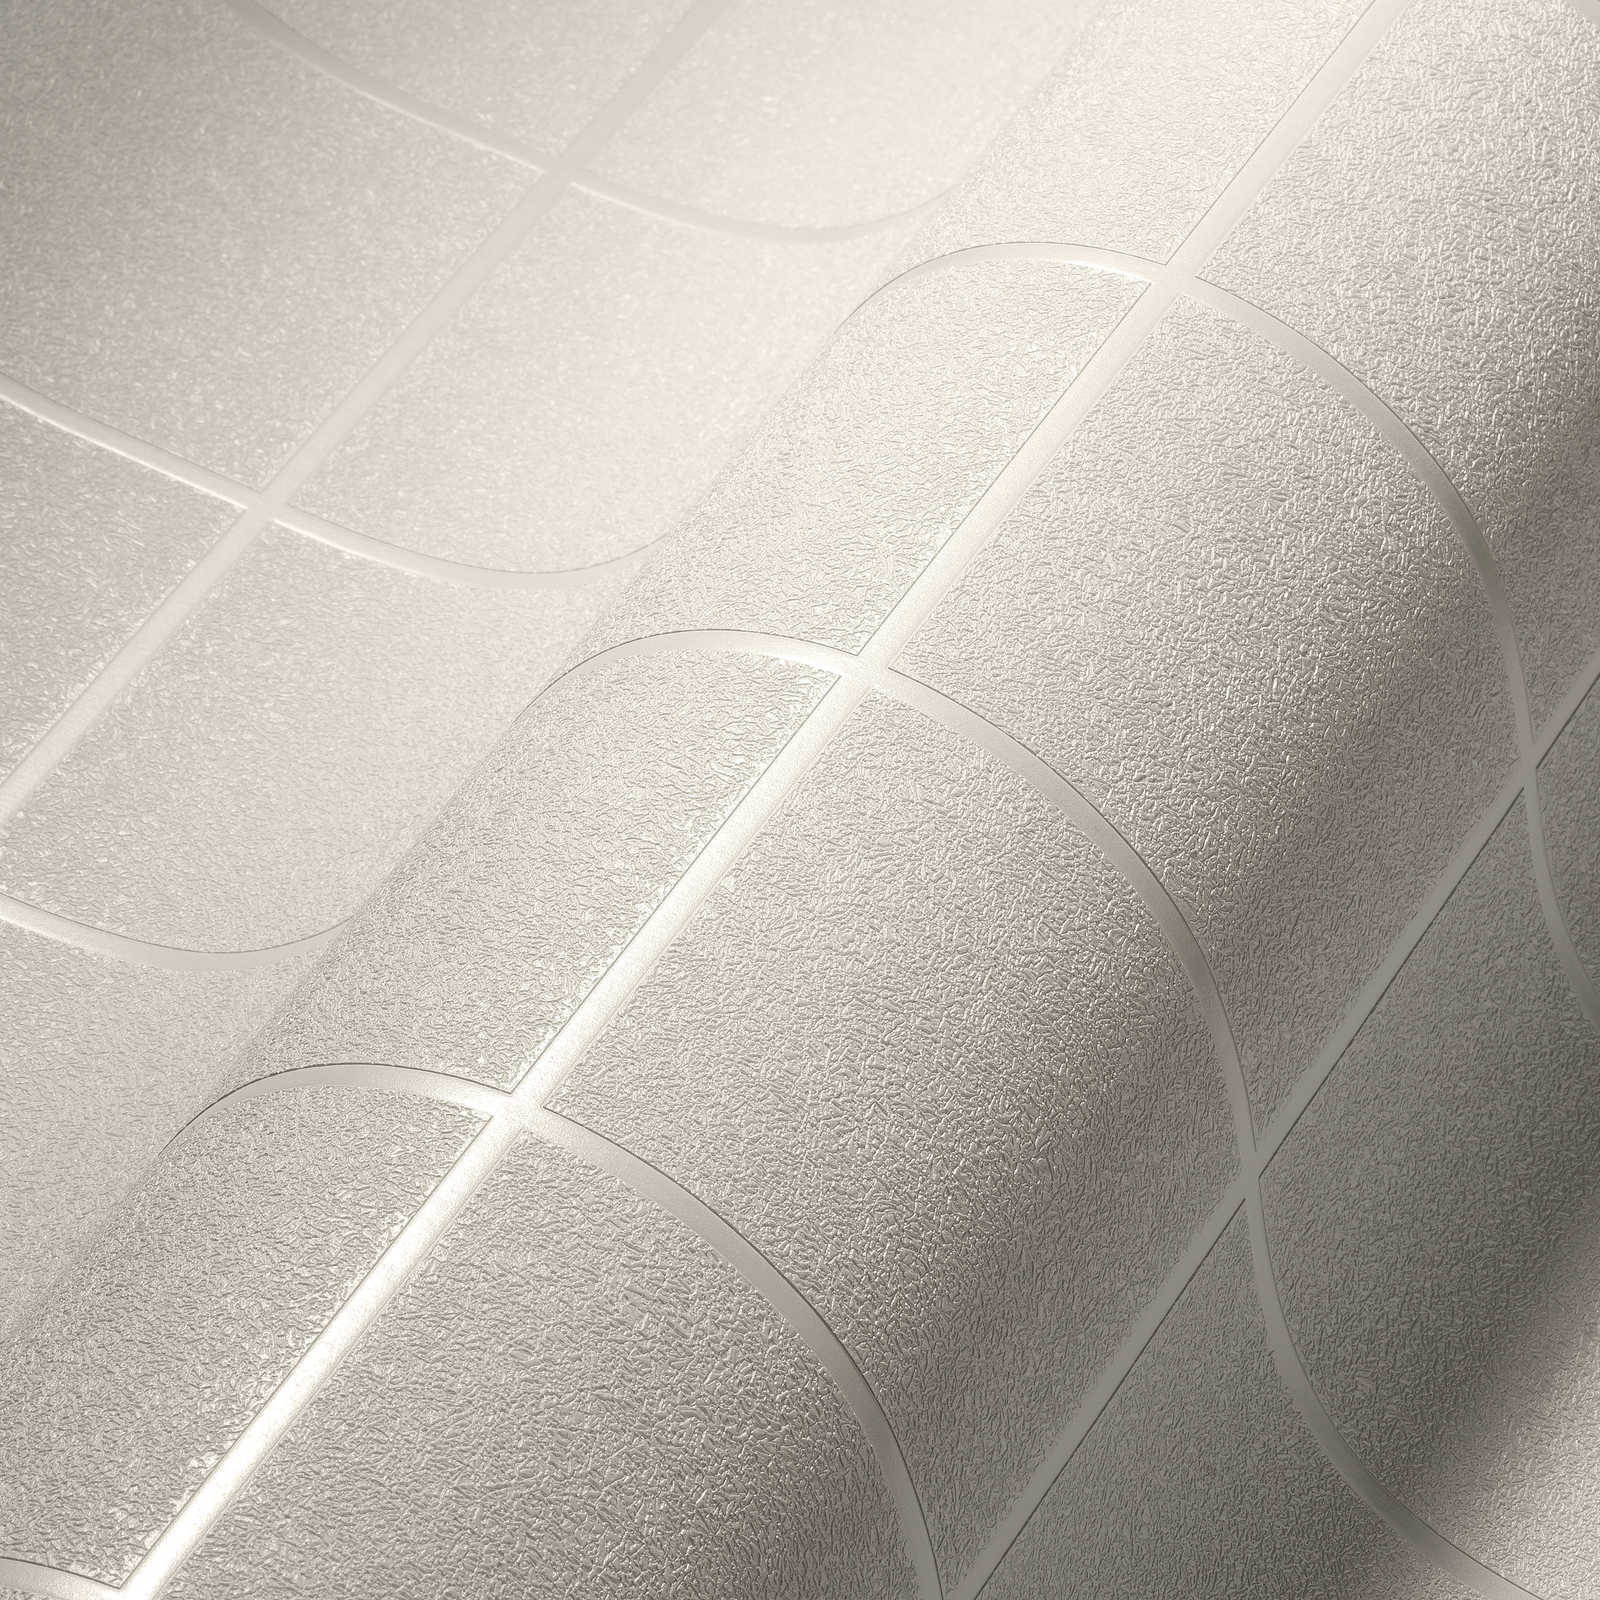             Wallpaper tile pattern, dark joints & 3D effect - Silver, White
        